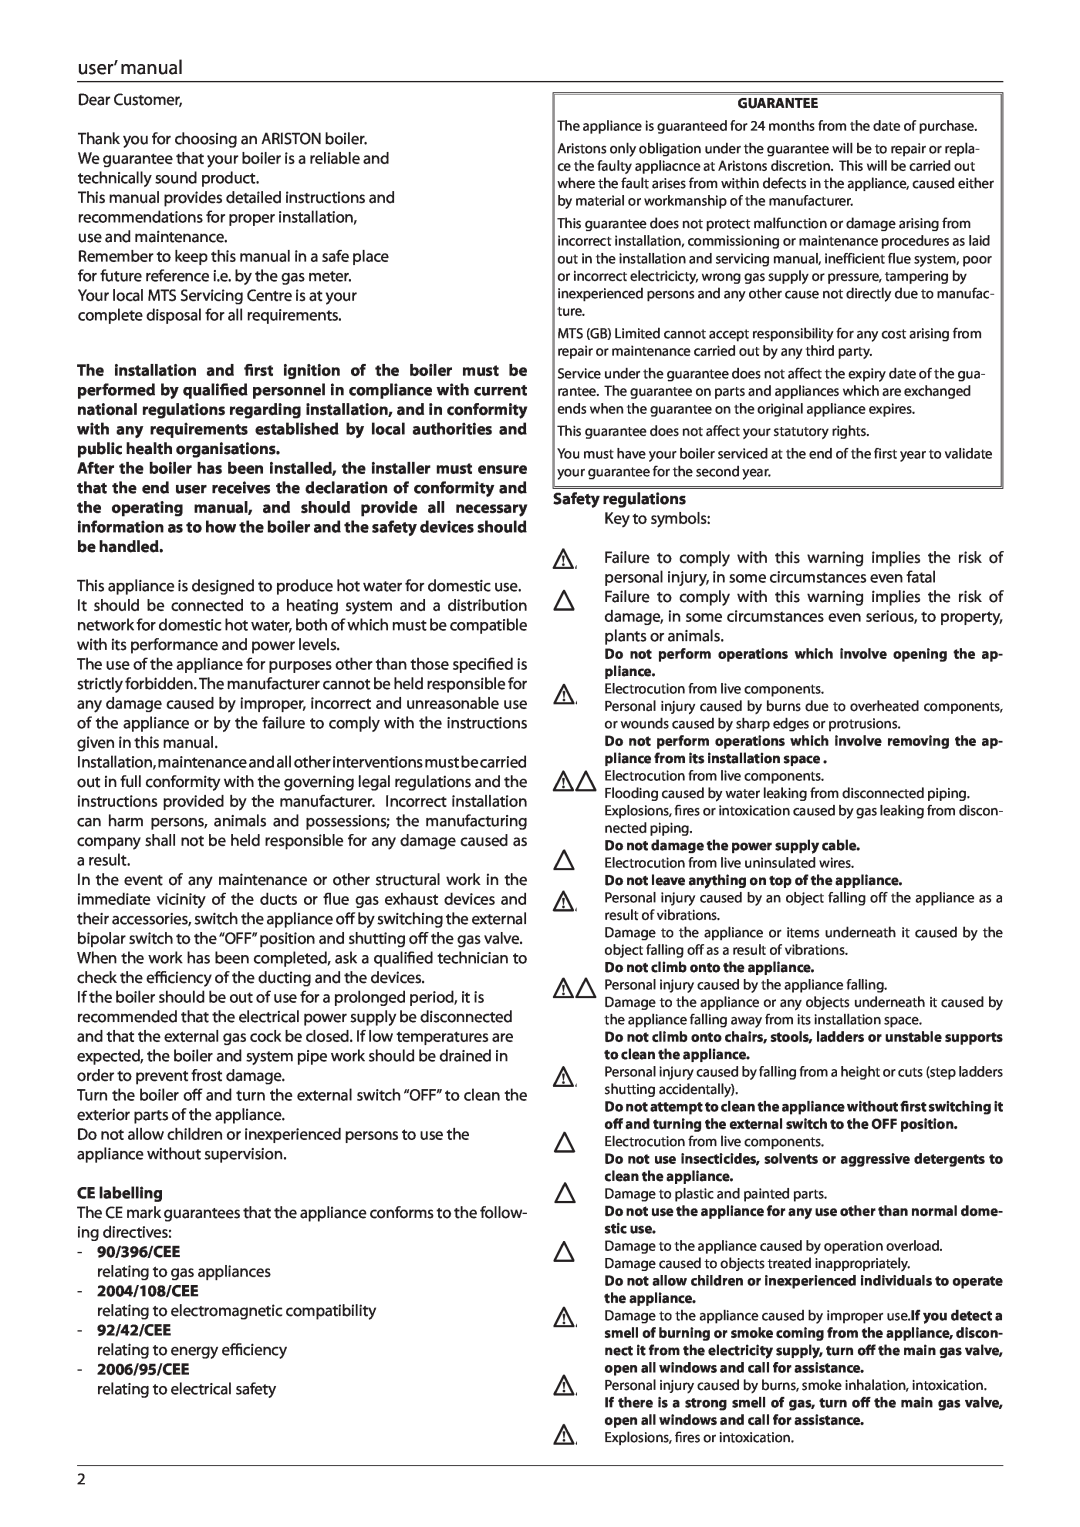 Ariston 47-116-52, 47-116-51, 47-116-53 CE labelling, 90/396/CEE, 2004/108/CEE, 92/42/CEE, 2006/95/CEE, Safety regulations 